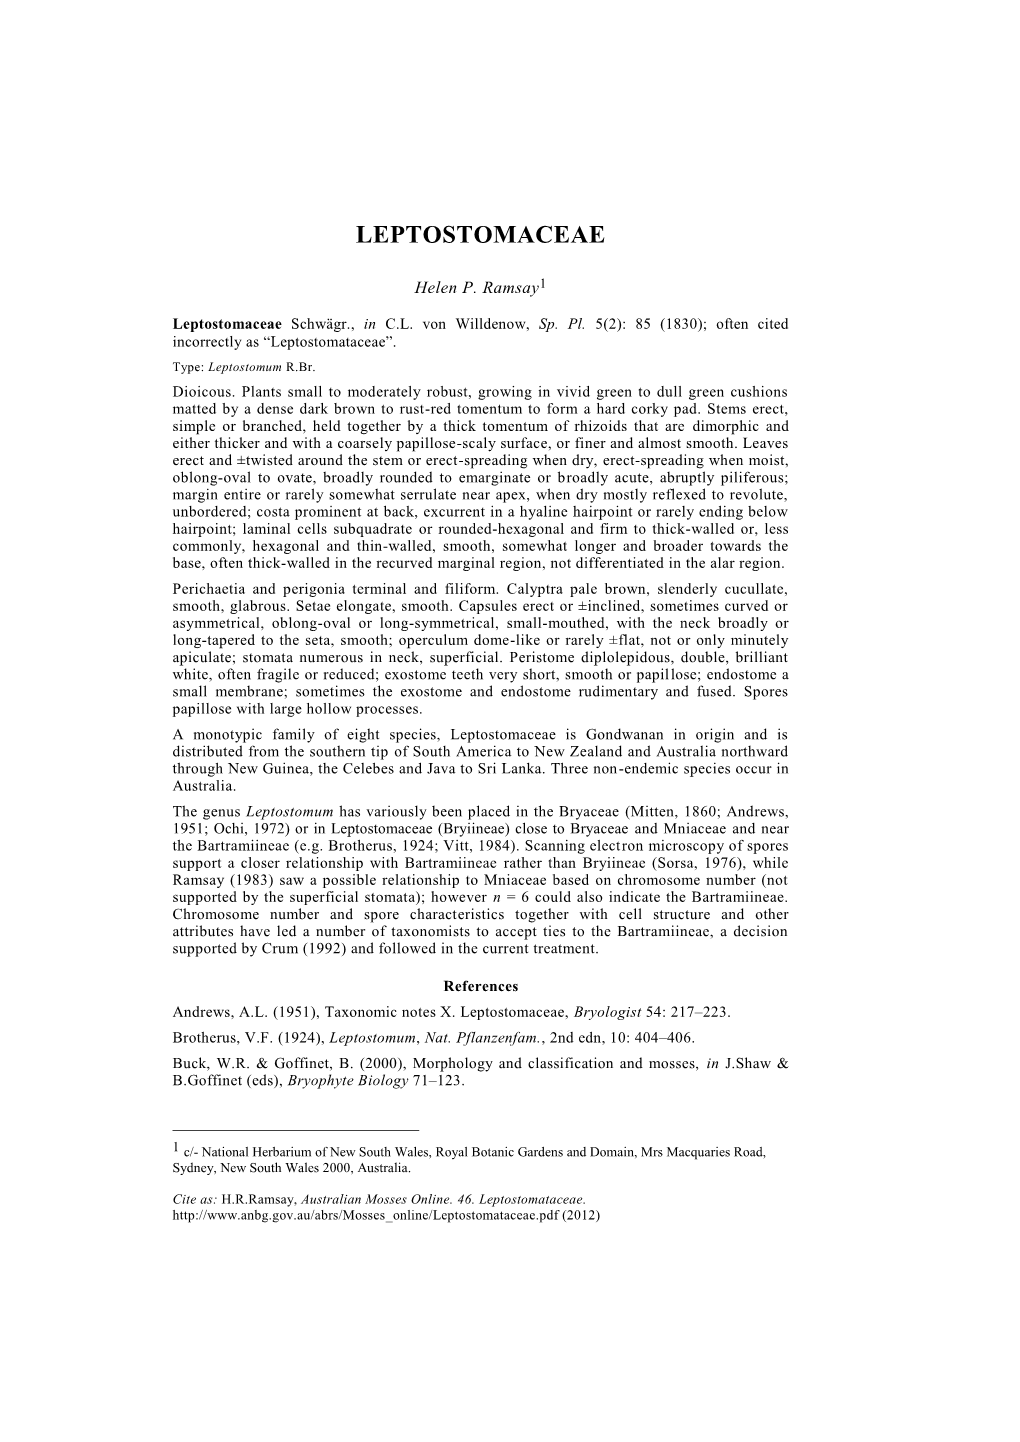 Leptostomataceae”